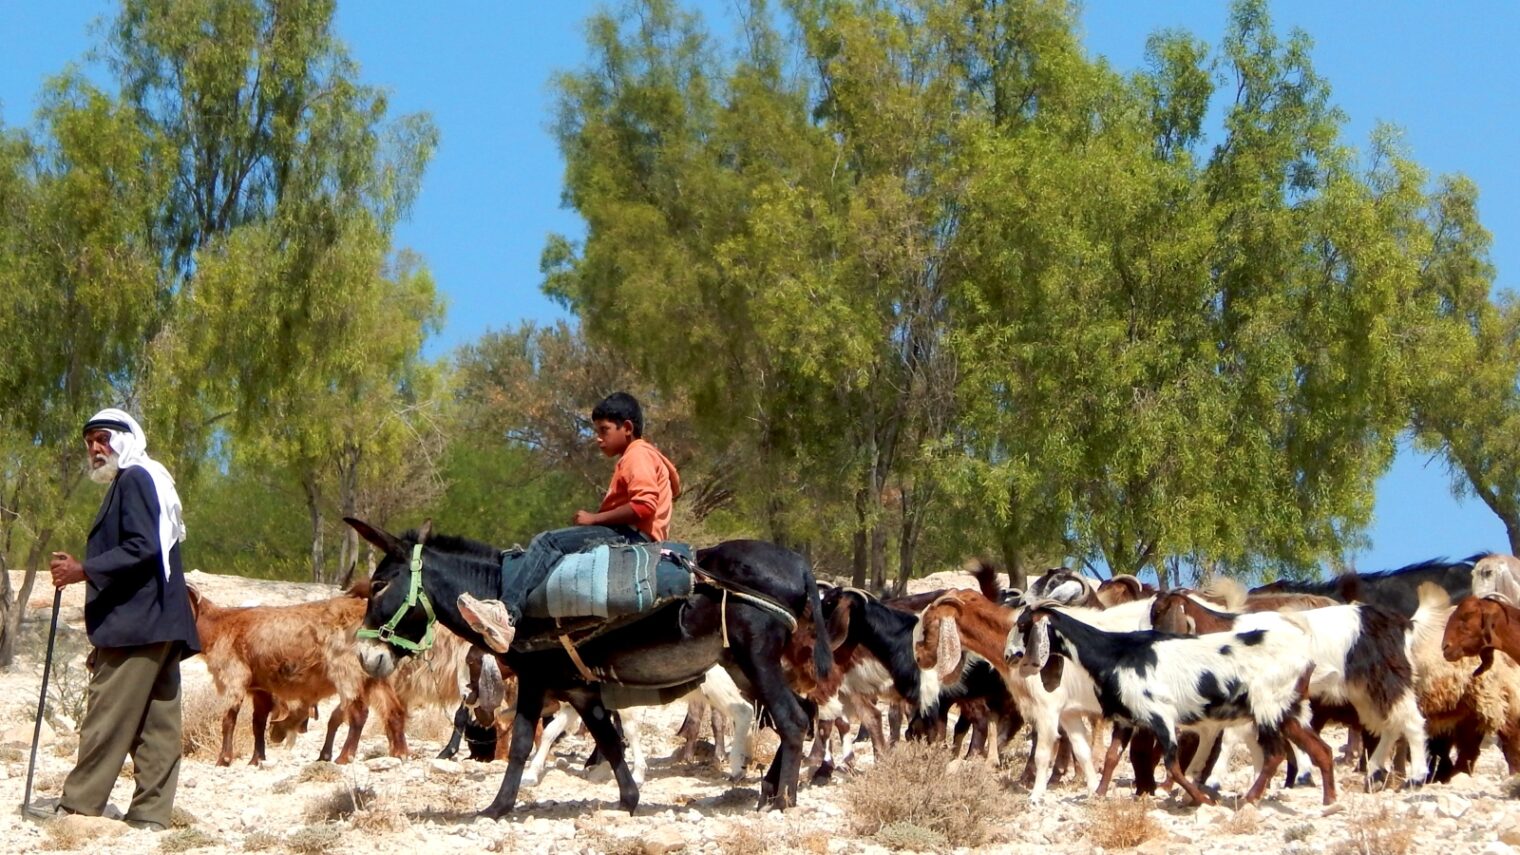 Bedouin shepherds tending their flocks on the hills of Ma'aleh Adumim. Photo by Daniel Santacruz